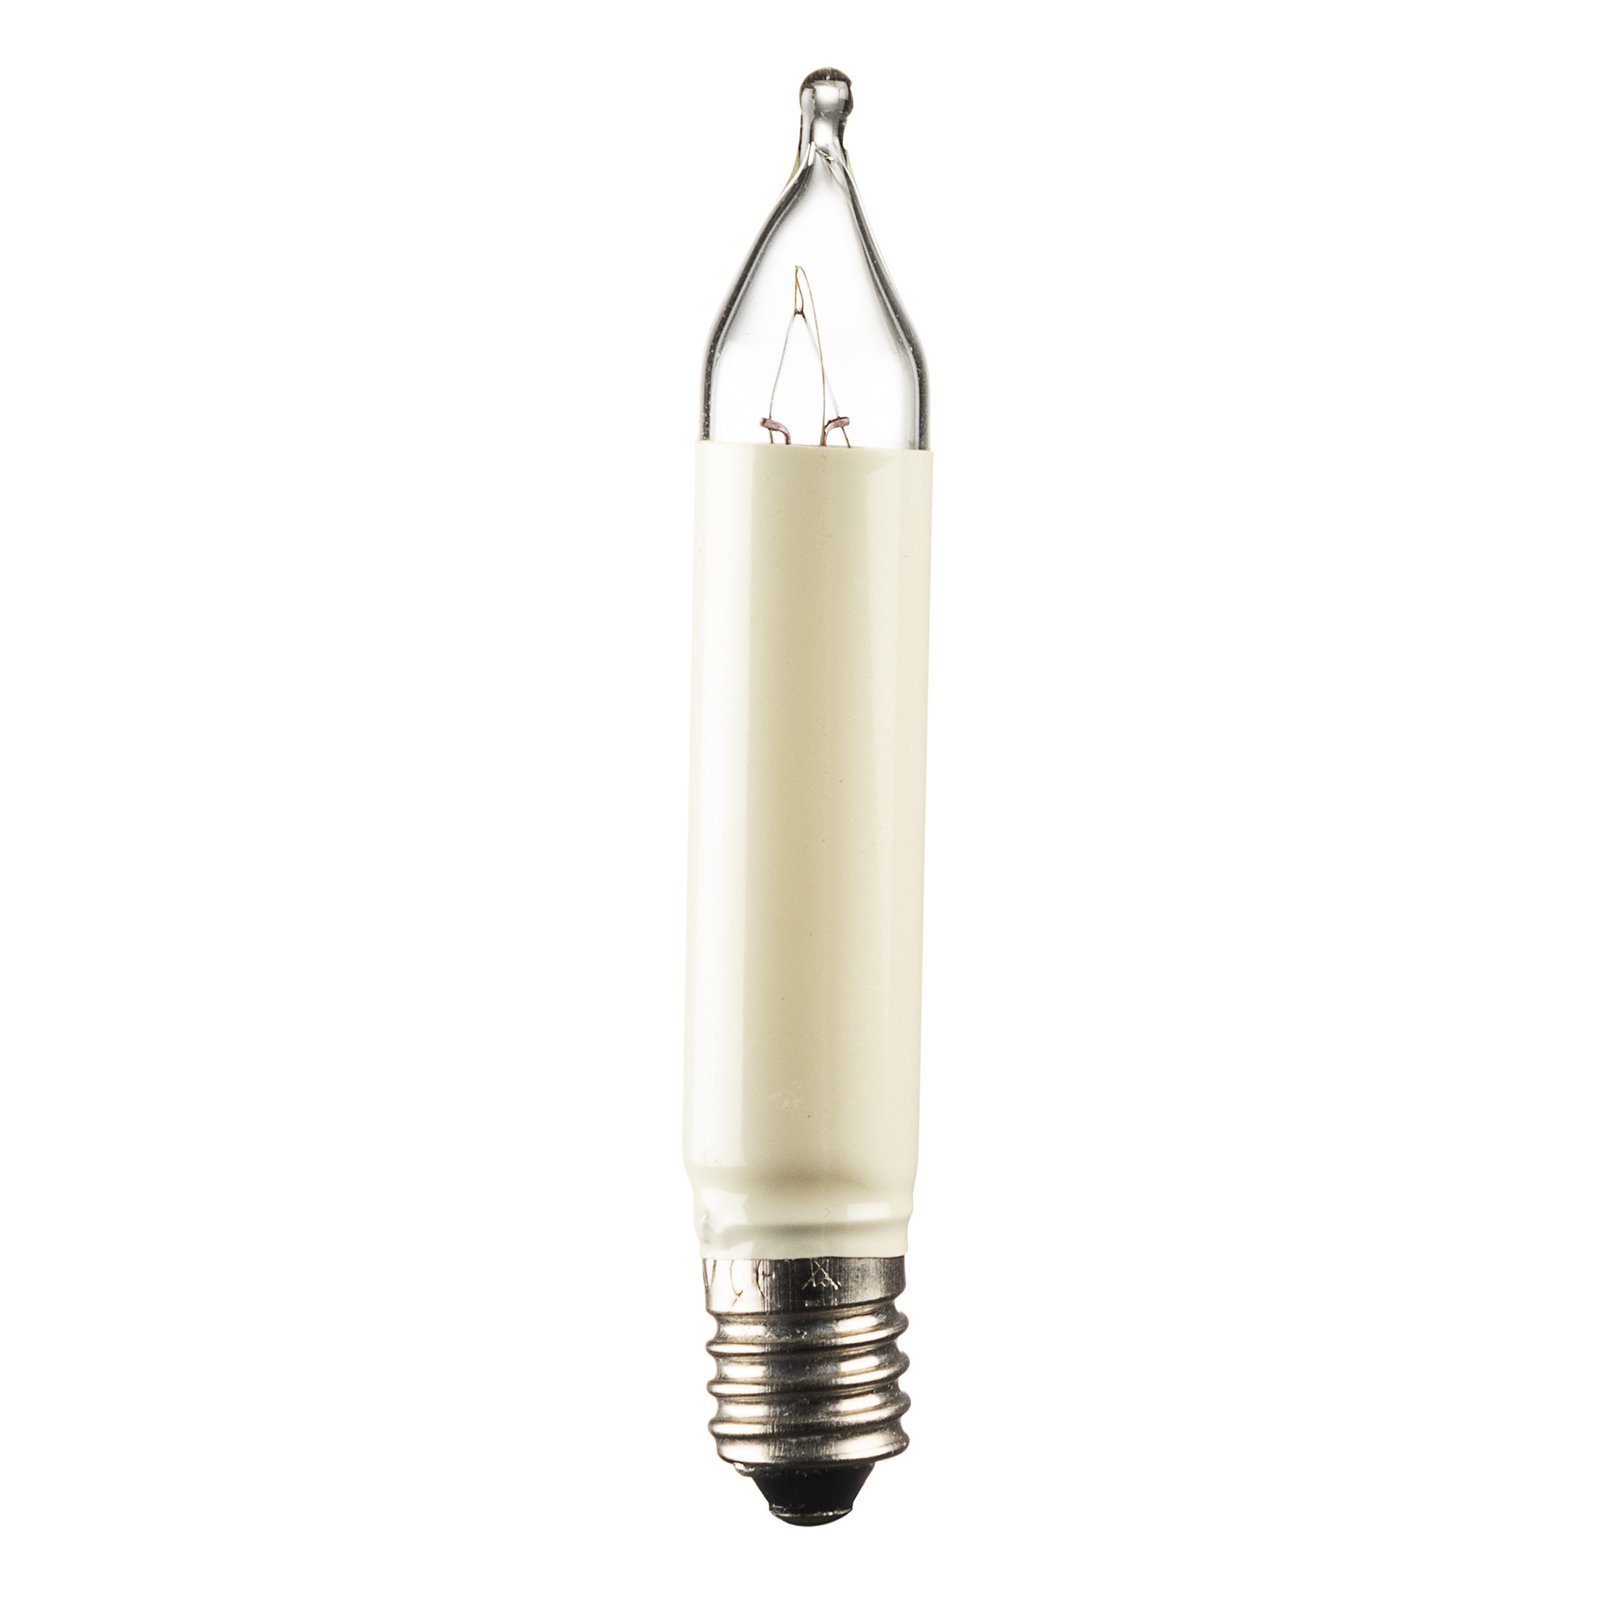 E10 3 W 8 V spare Xmas tree bulbs, pack of 2